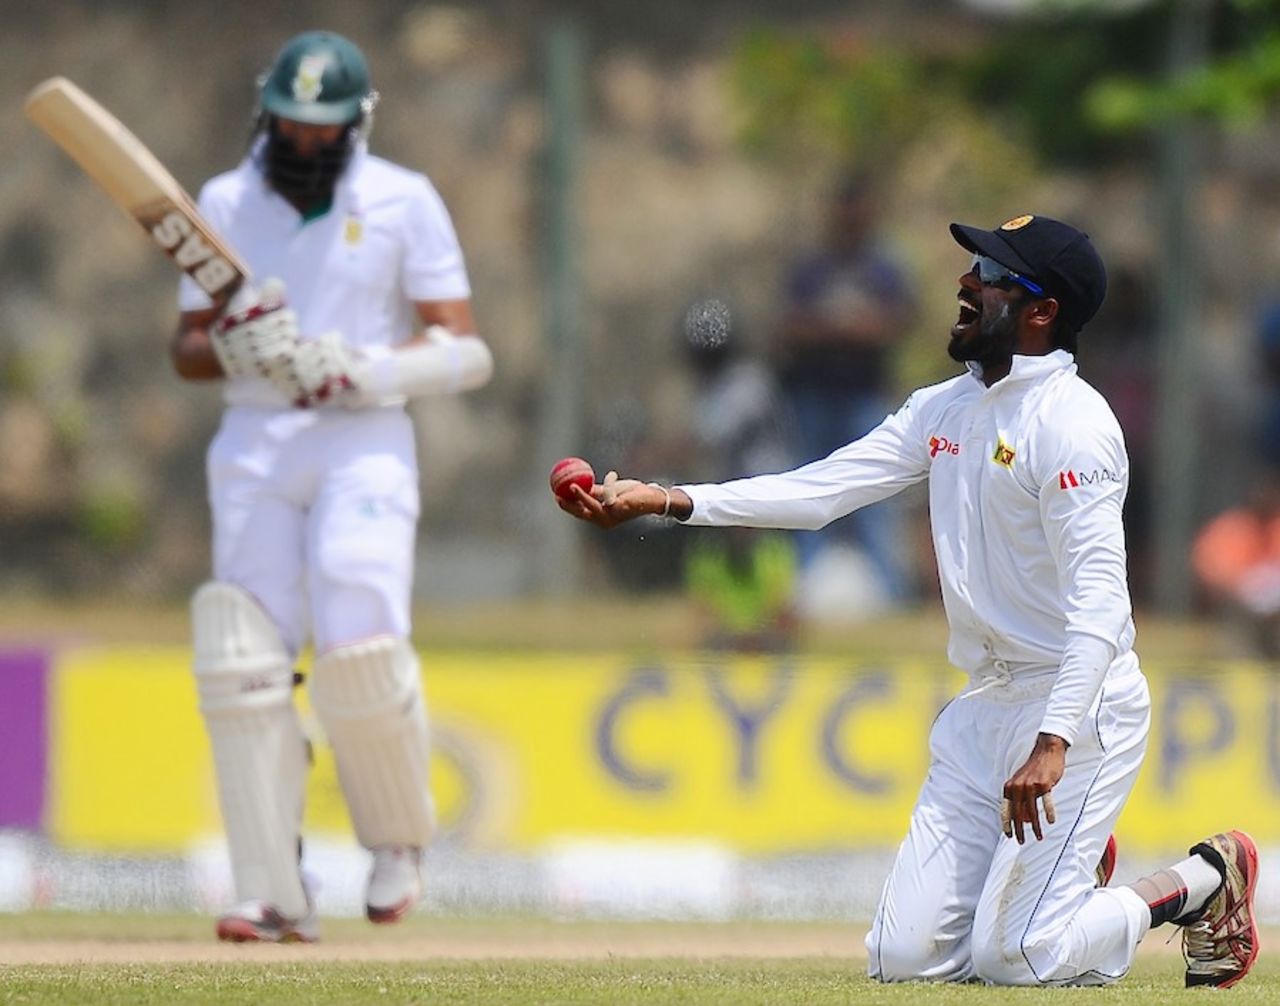 Upul Tharanga celebrates after catching Hashim Amla at midwicket, Sri Lanka v South Africa, 1st Test, Galle, 4th day, July 19, 2014